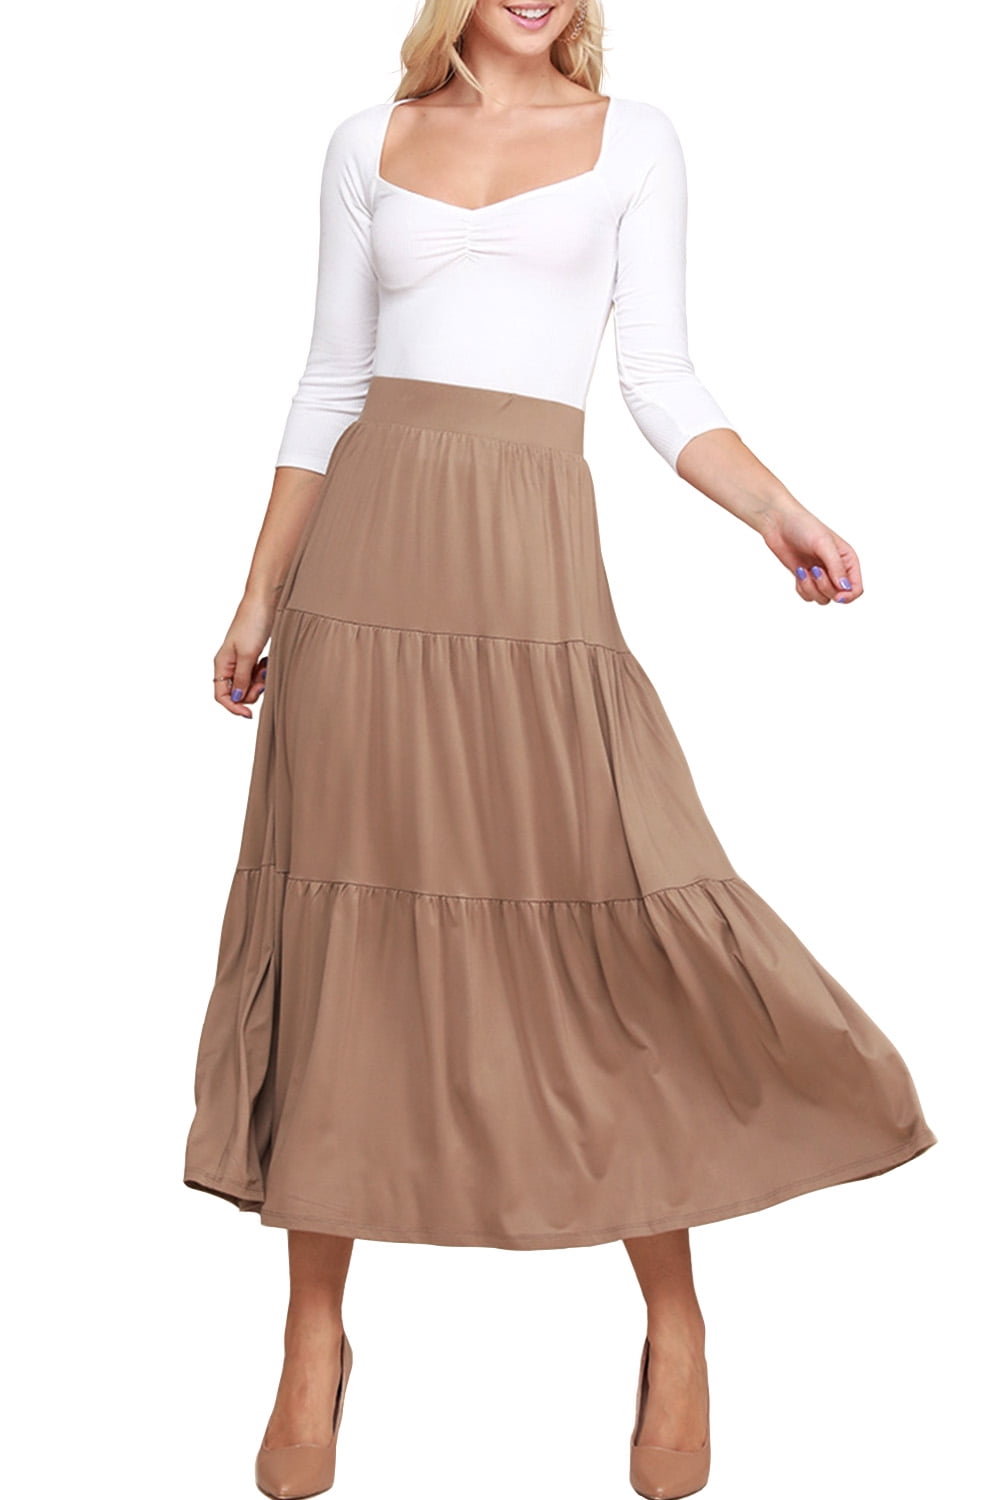 Whear Women Elastic High Waist Pleated Skirt Flare Solid Color A Line Shirring Casual Long Skirt Beach